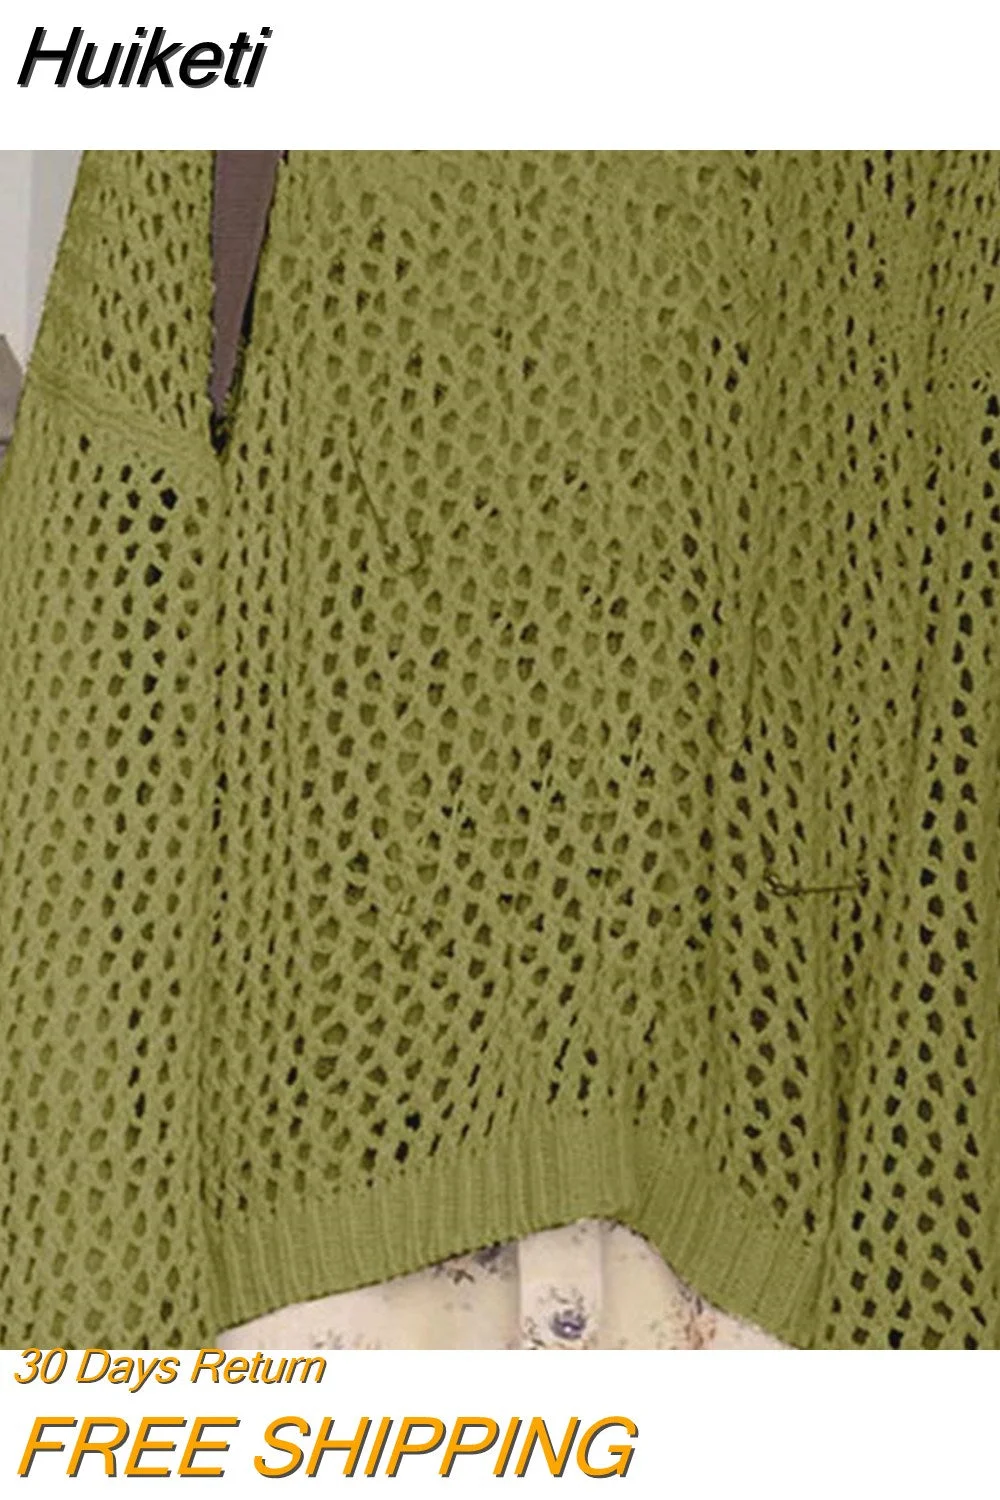 Huiketi Women Hollow Out Crochet Sweater Vintage Fairycore Grunge Smock Knit Pullovers Fishnet Bathing Suit Cover Ups Swimwear